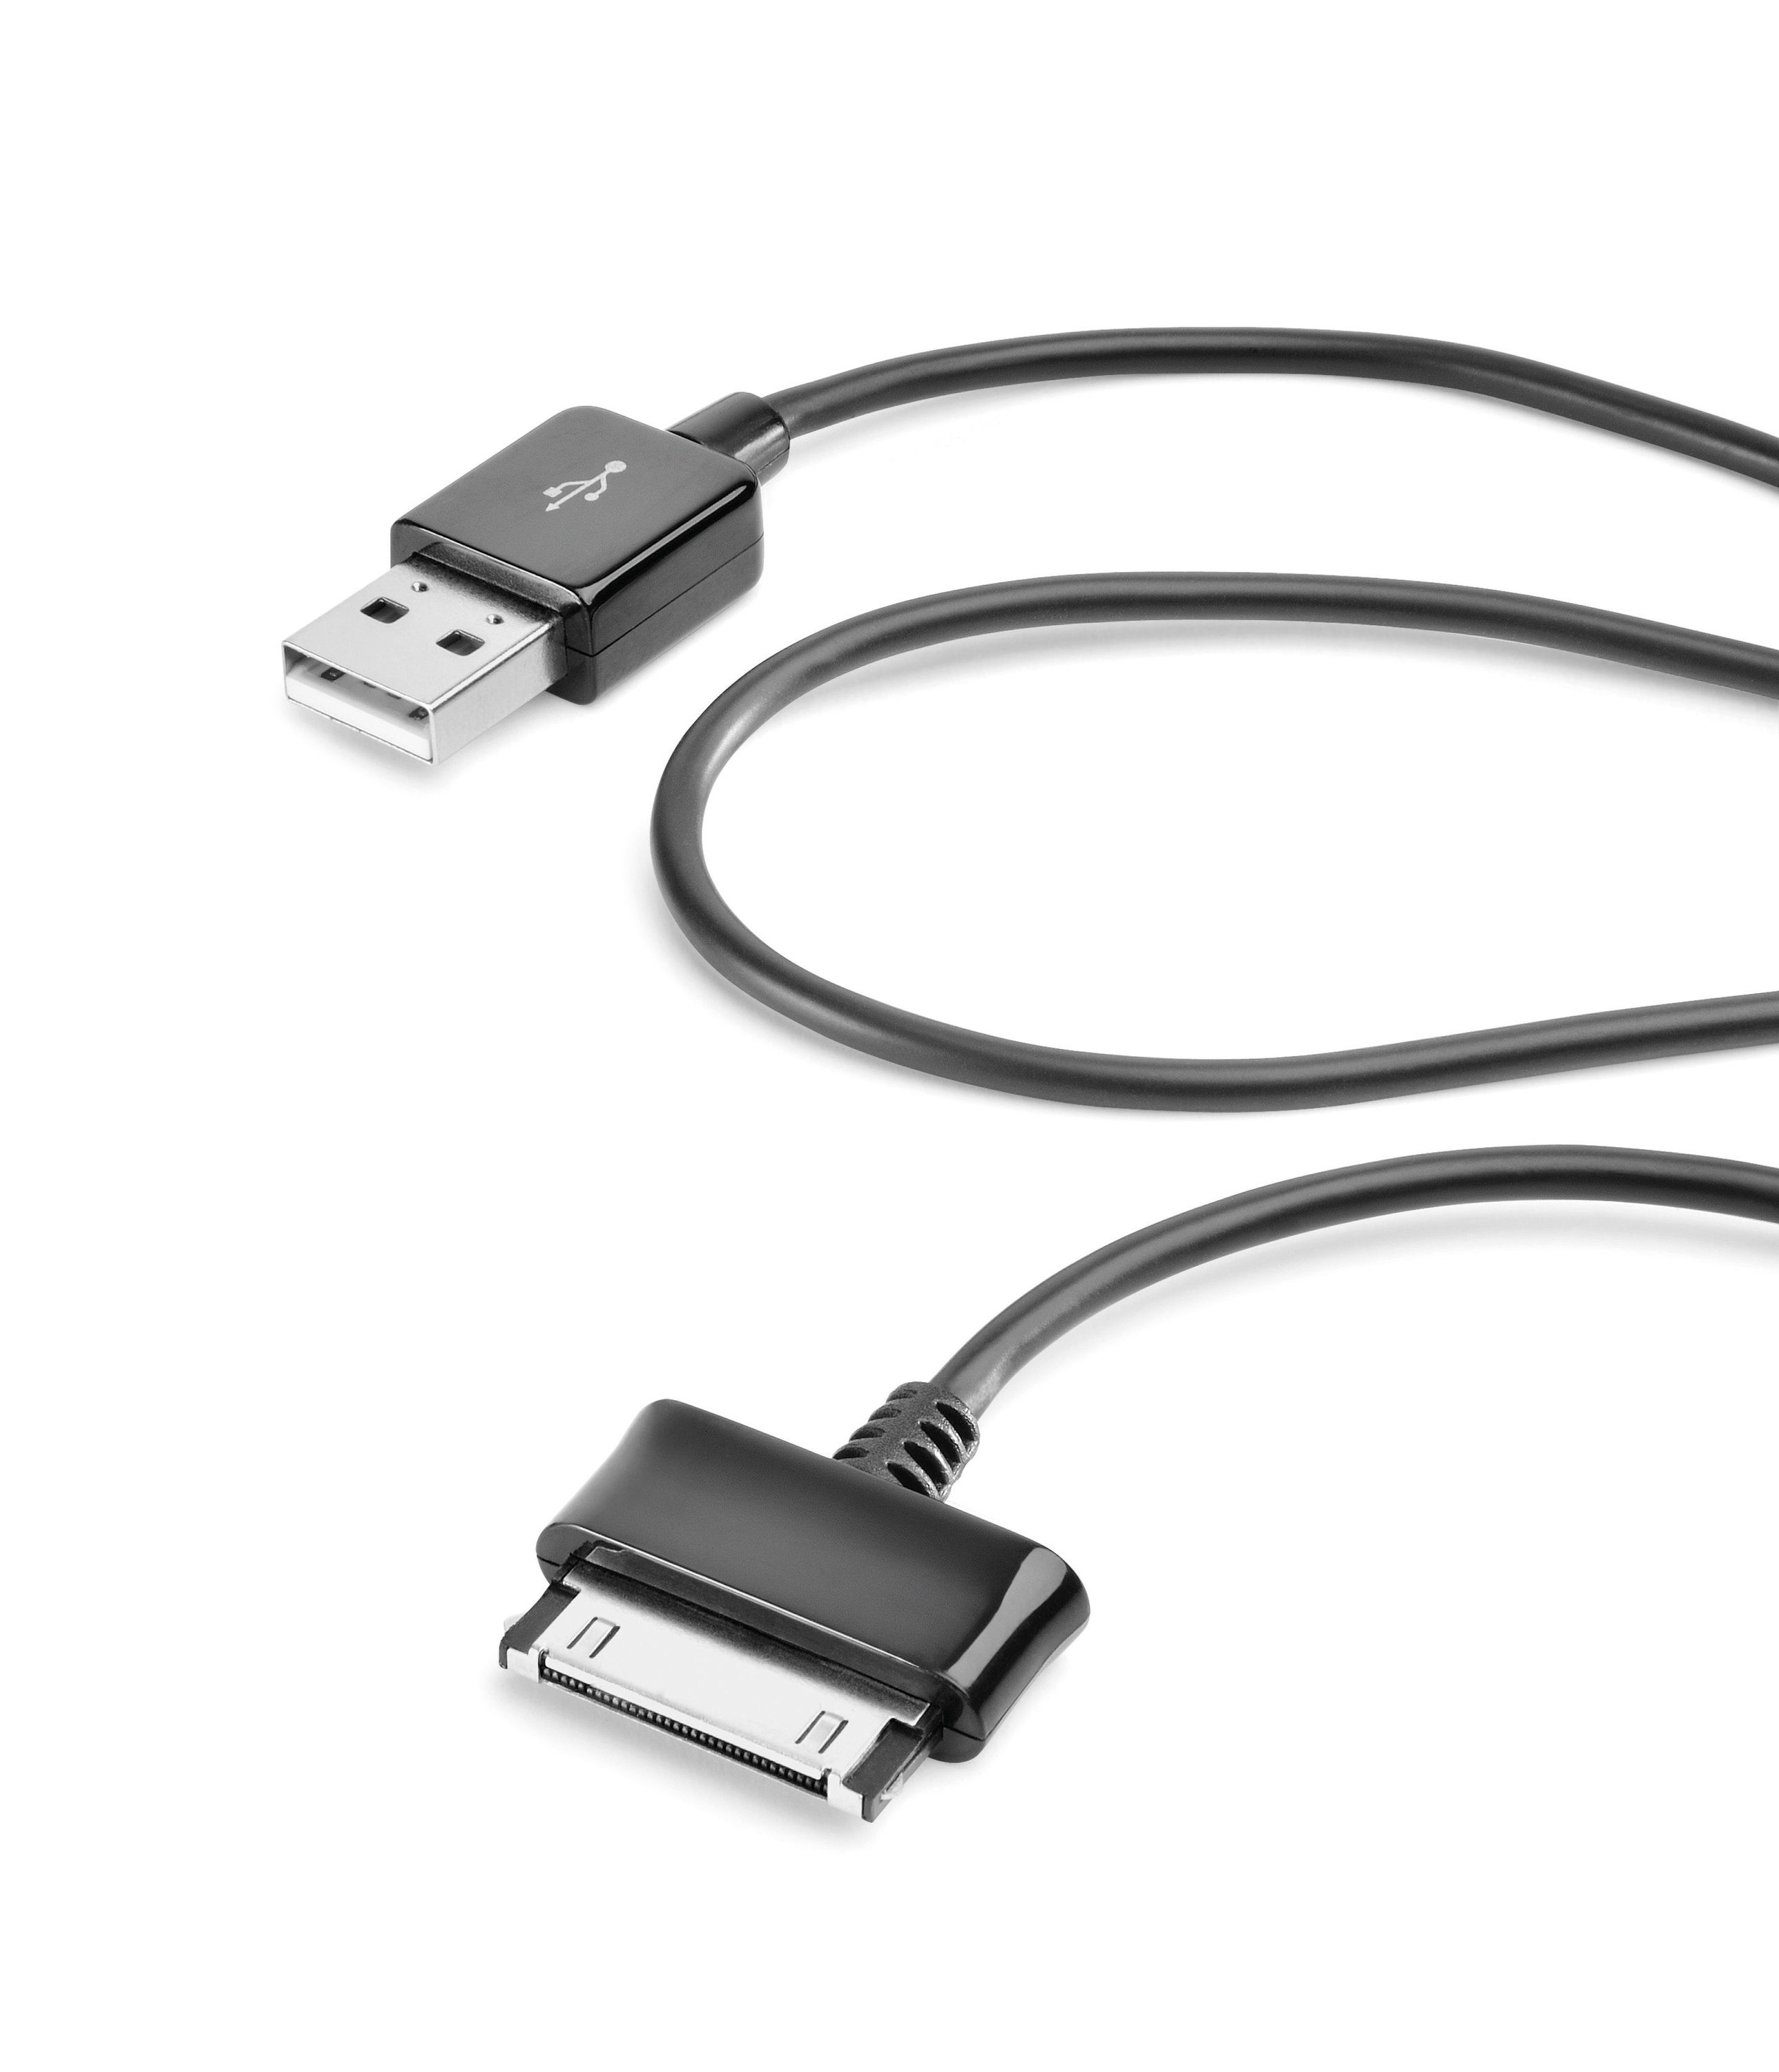 Таб си. Кабель USB - для Samsung Galaxy p1000. P1000 Samsung шнур USB. Кабель зарядки самсунг гелакси таб. Кабель USB Samsung Tab.